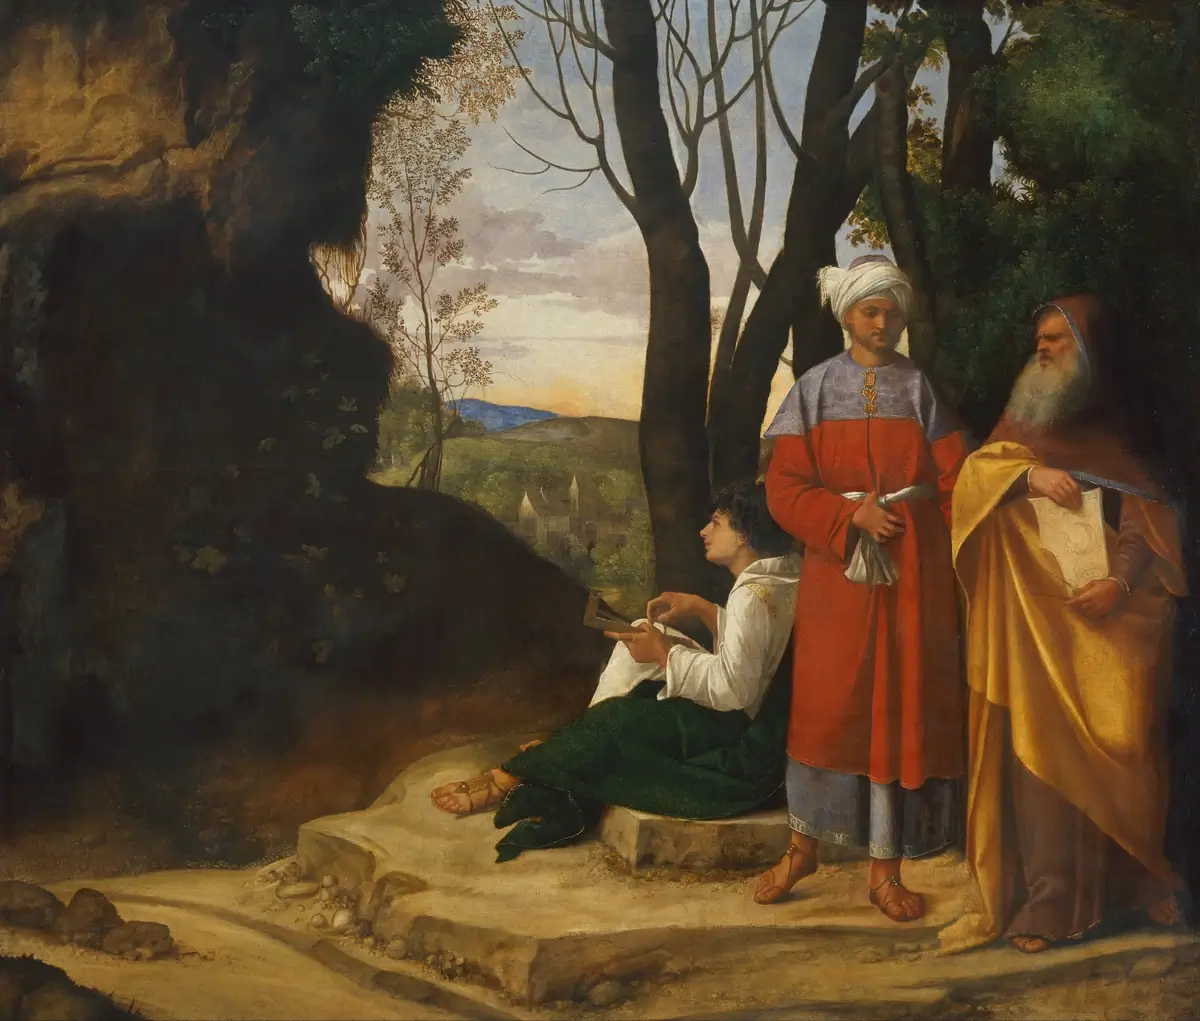 Giorgione, "The Three Philosophers", 1509